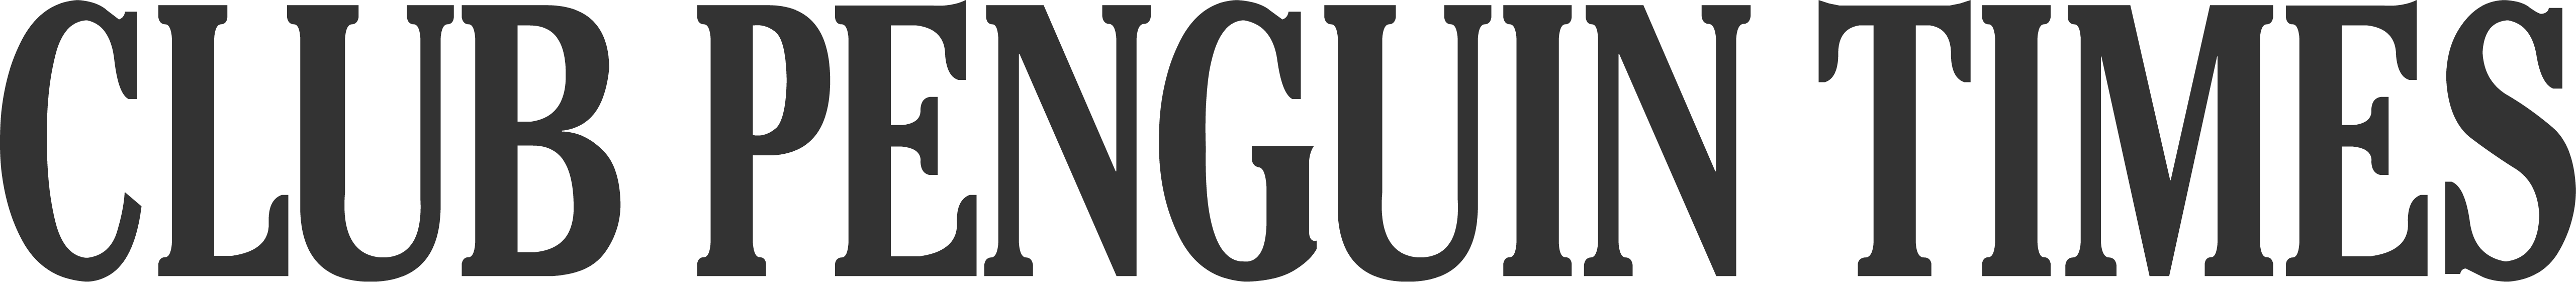 Club_Penguin_Times_logo